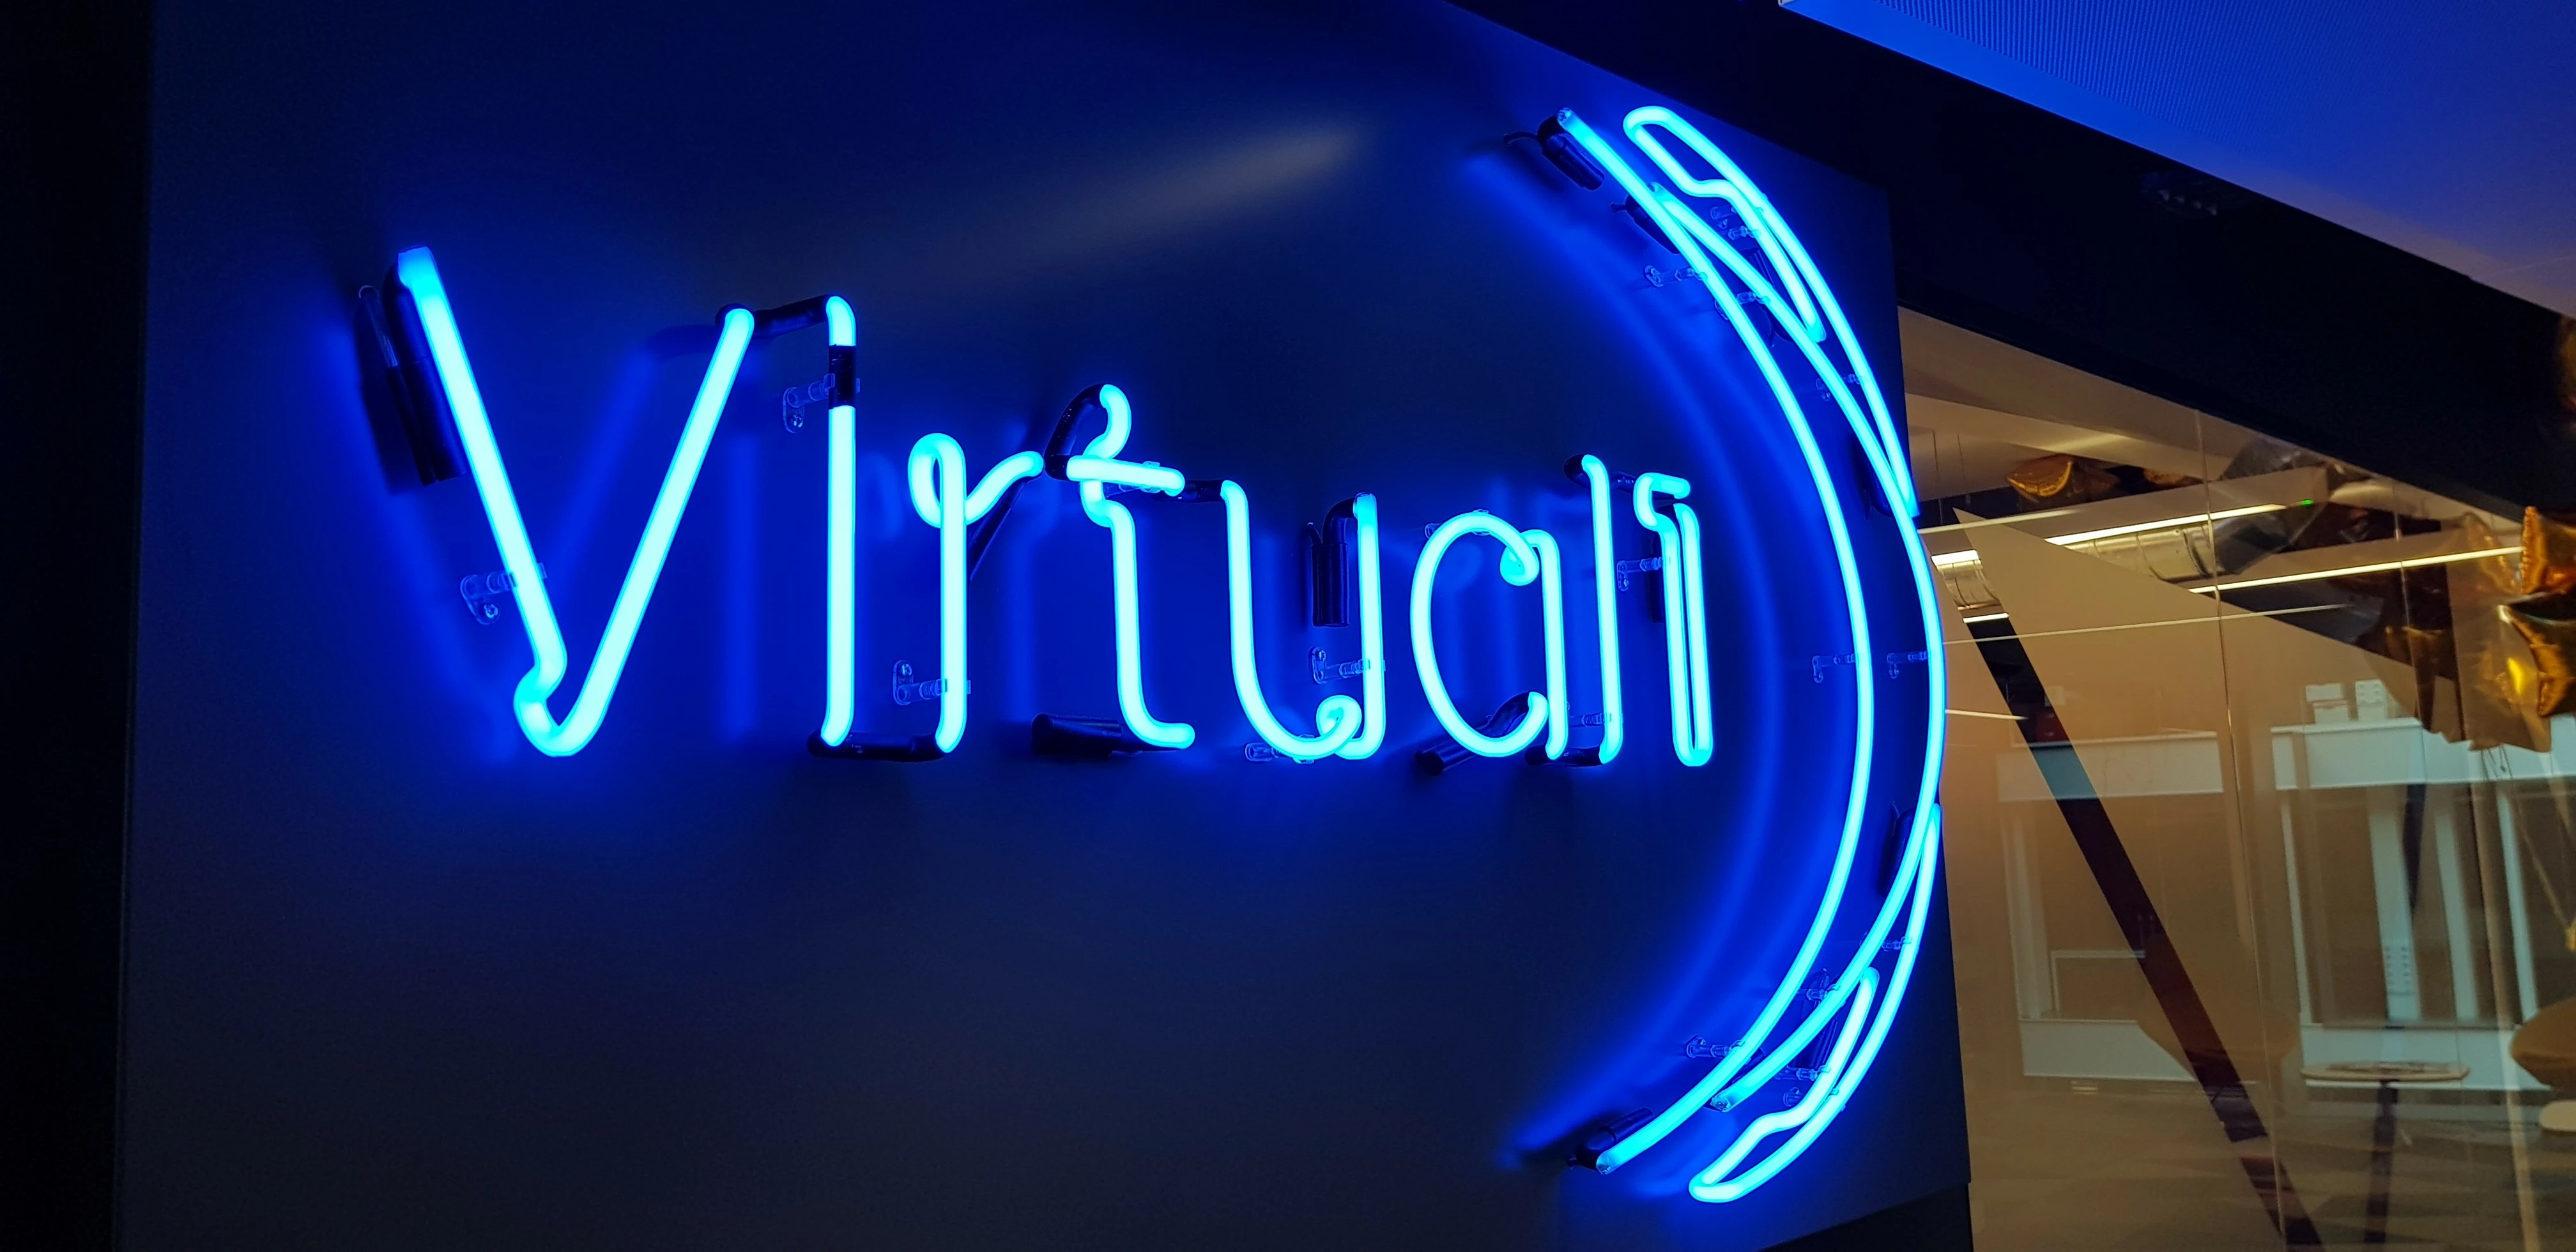 Virtual1